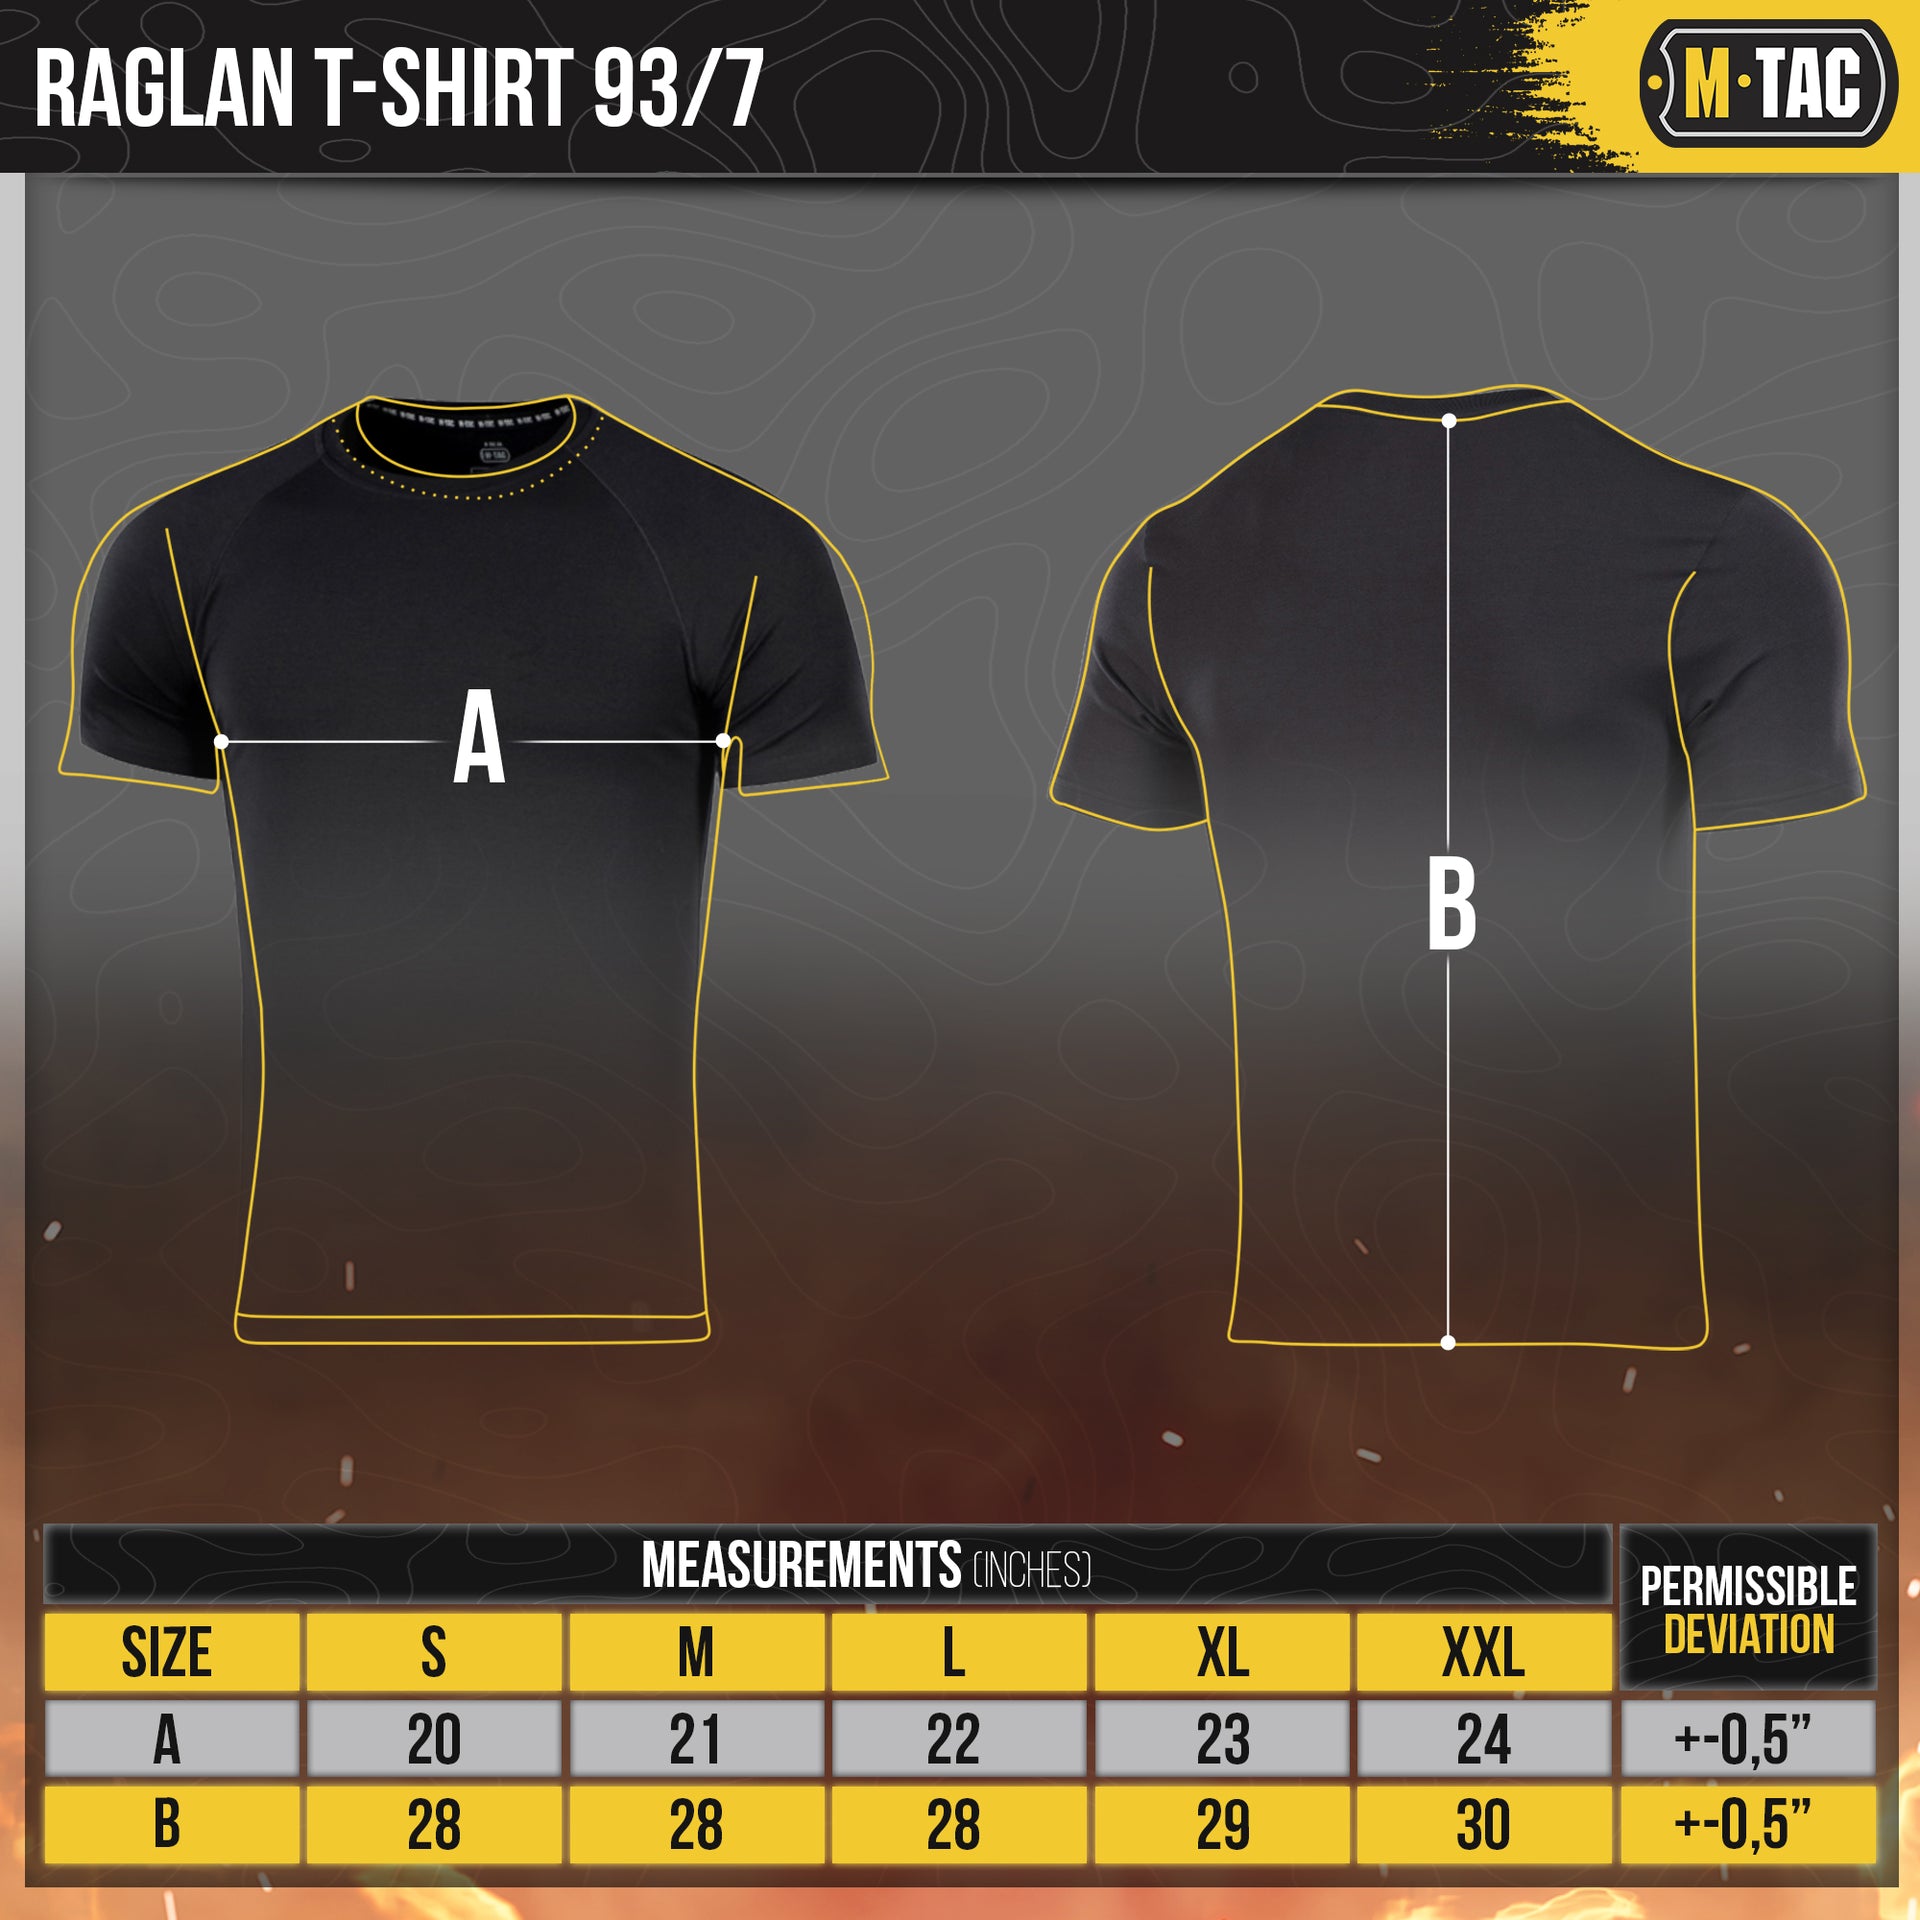 M-Tac Raglan T-Shirt 93/7